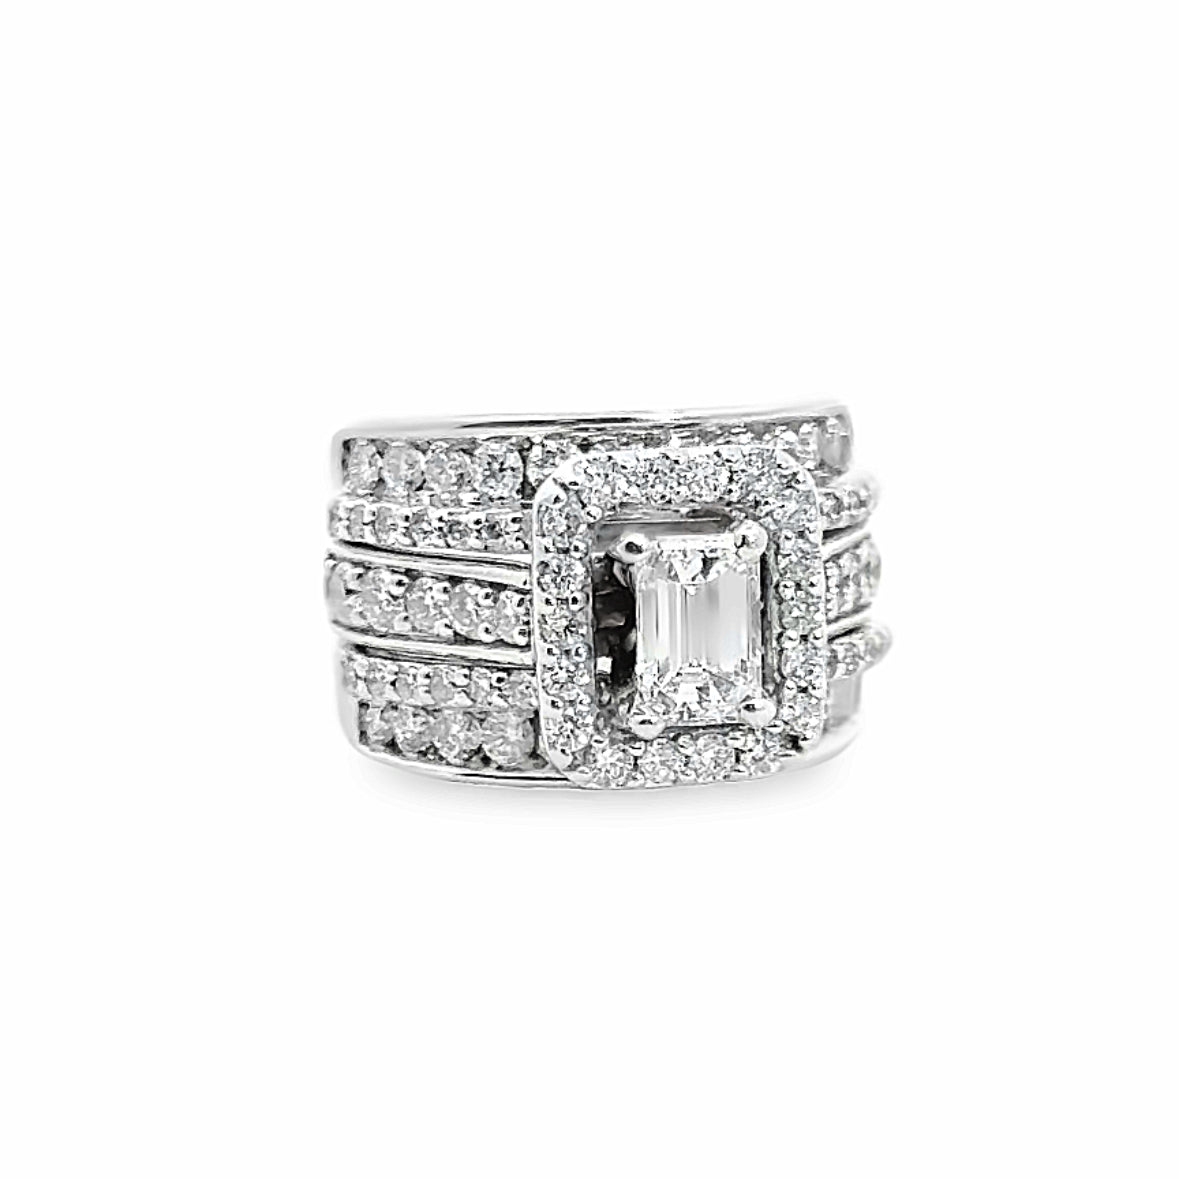 Luxurious 14K White Gold Diamond Halo Engagement Ring